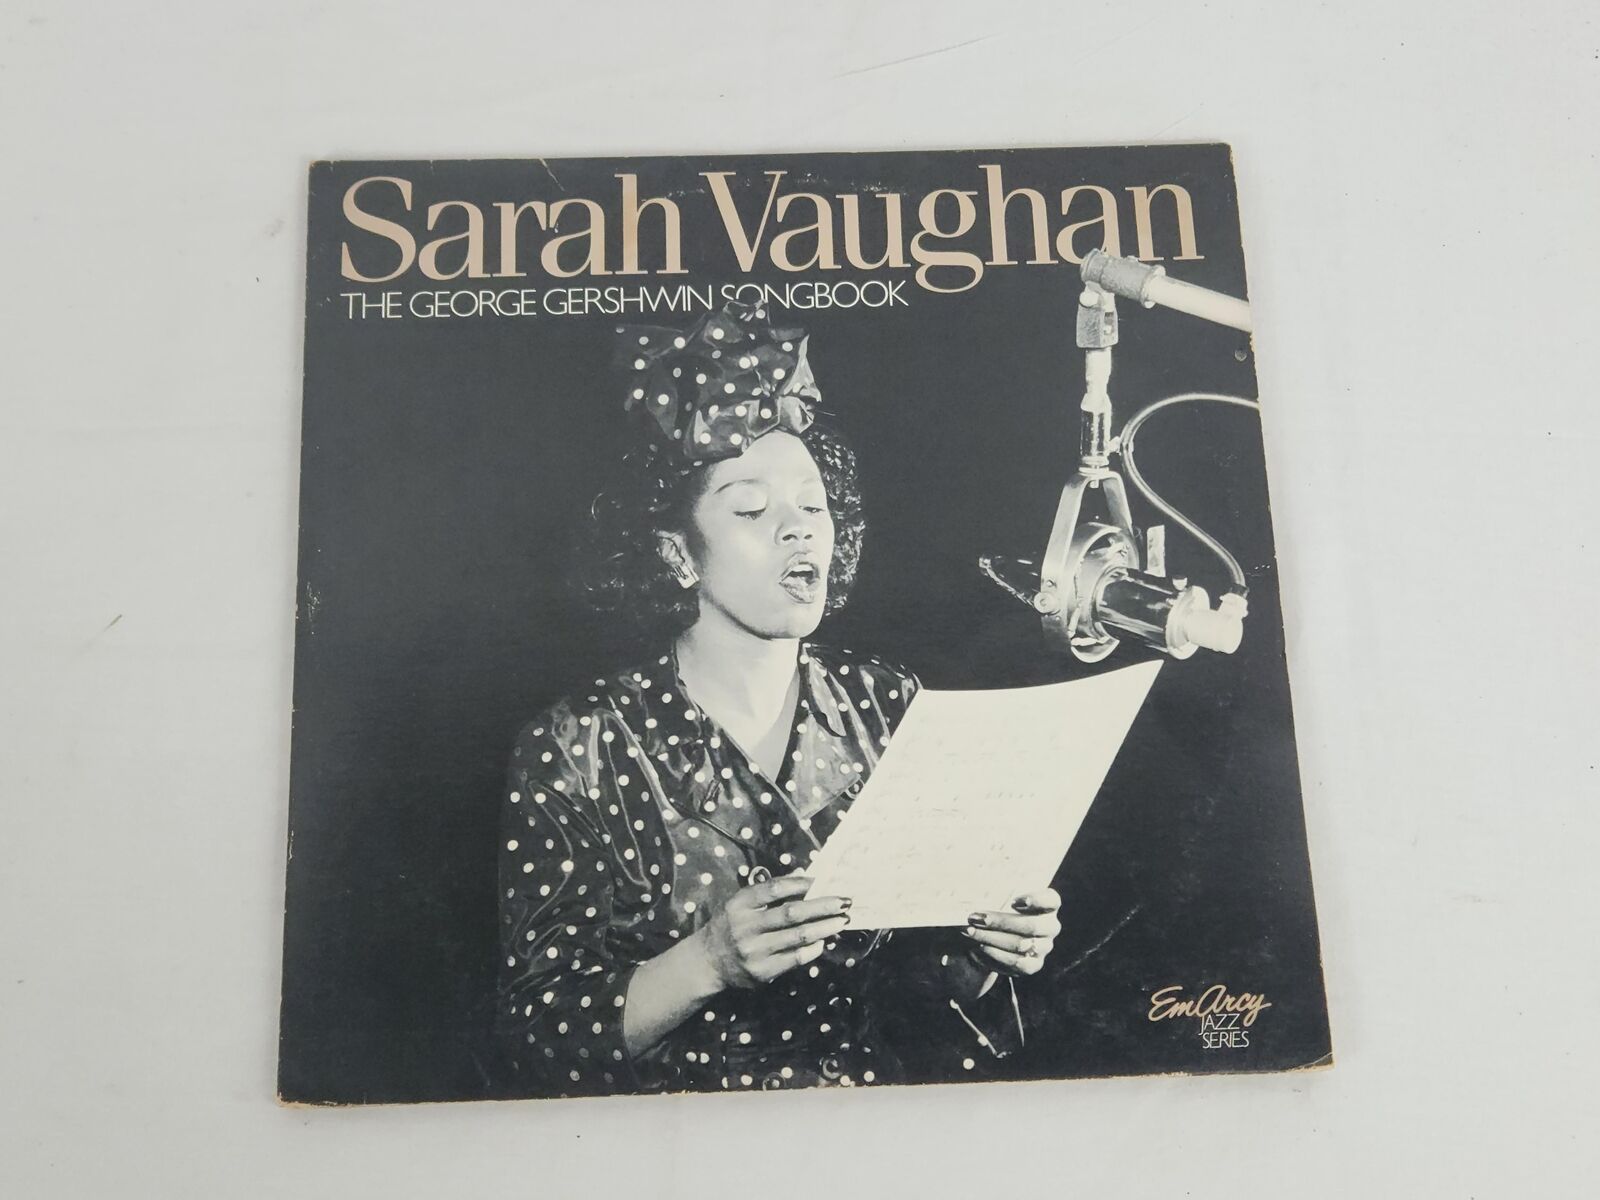 Sarah Vaughan The George Gershwin Songbook Vinyl Record - Emarcy